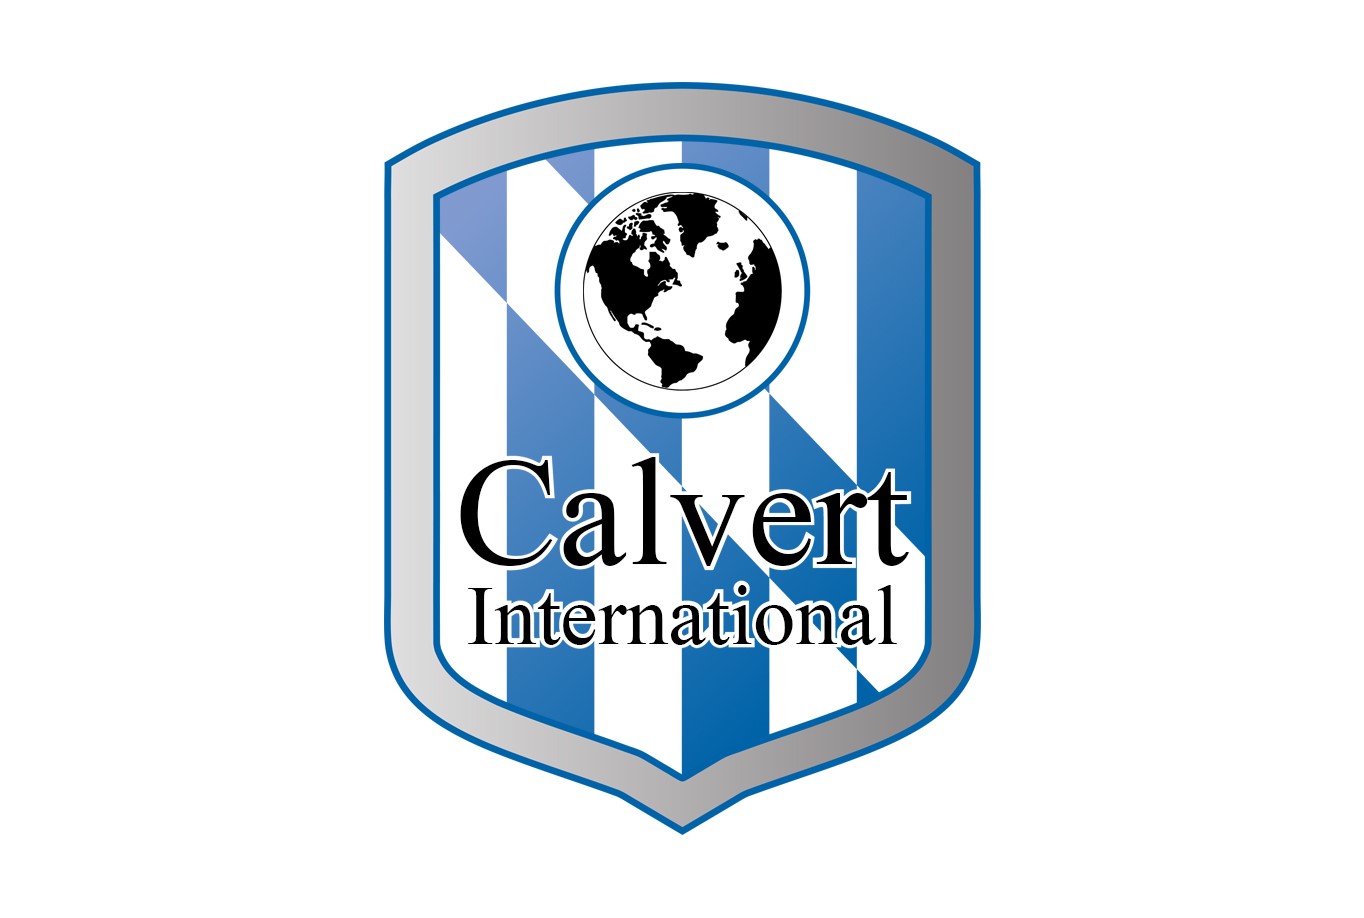 Calvert image.jpg